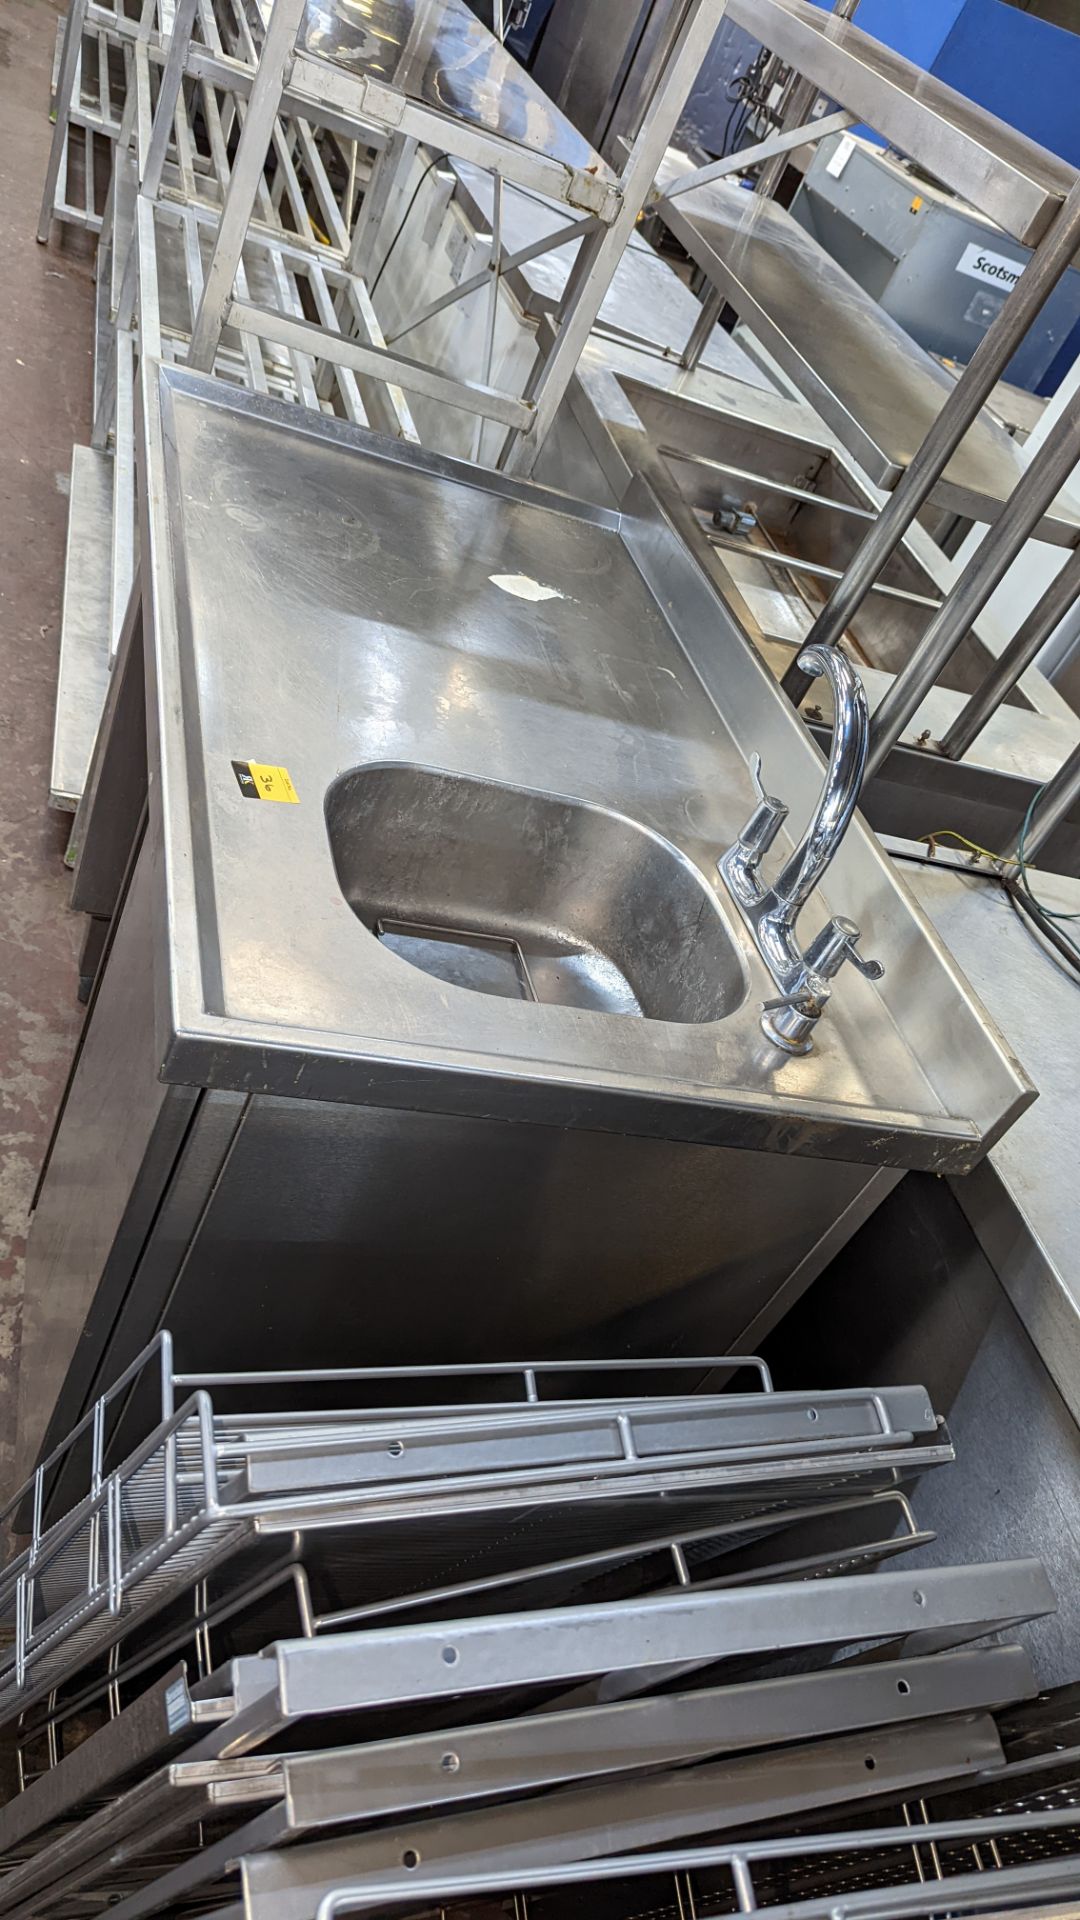 Stainless steel freestanding sink & drainer arrangement including storage below - Image 5 of 5